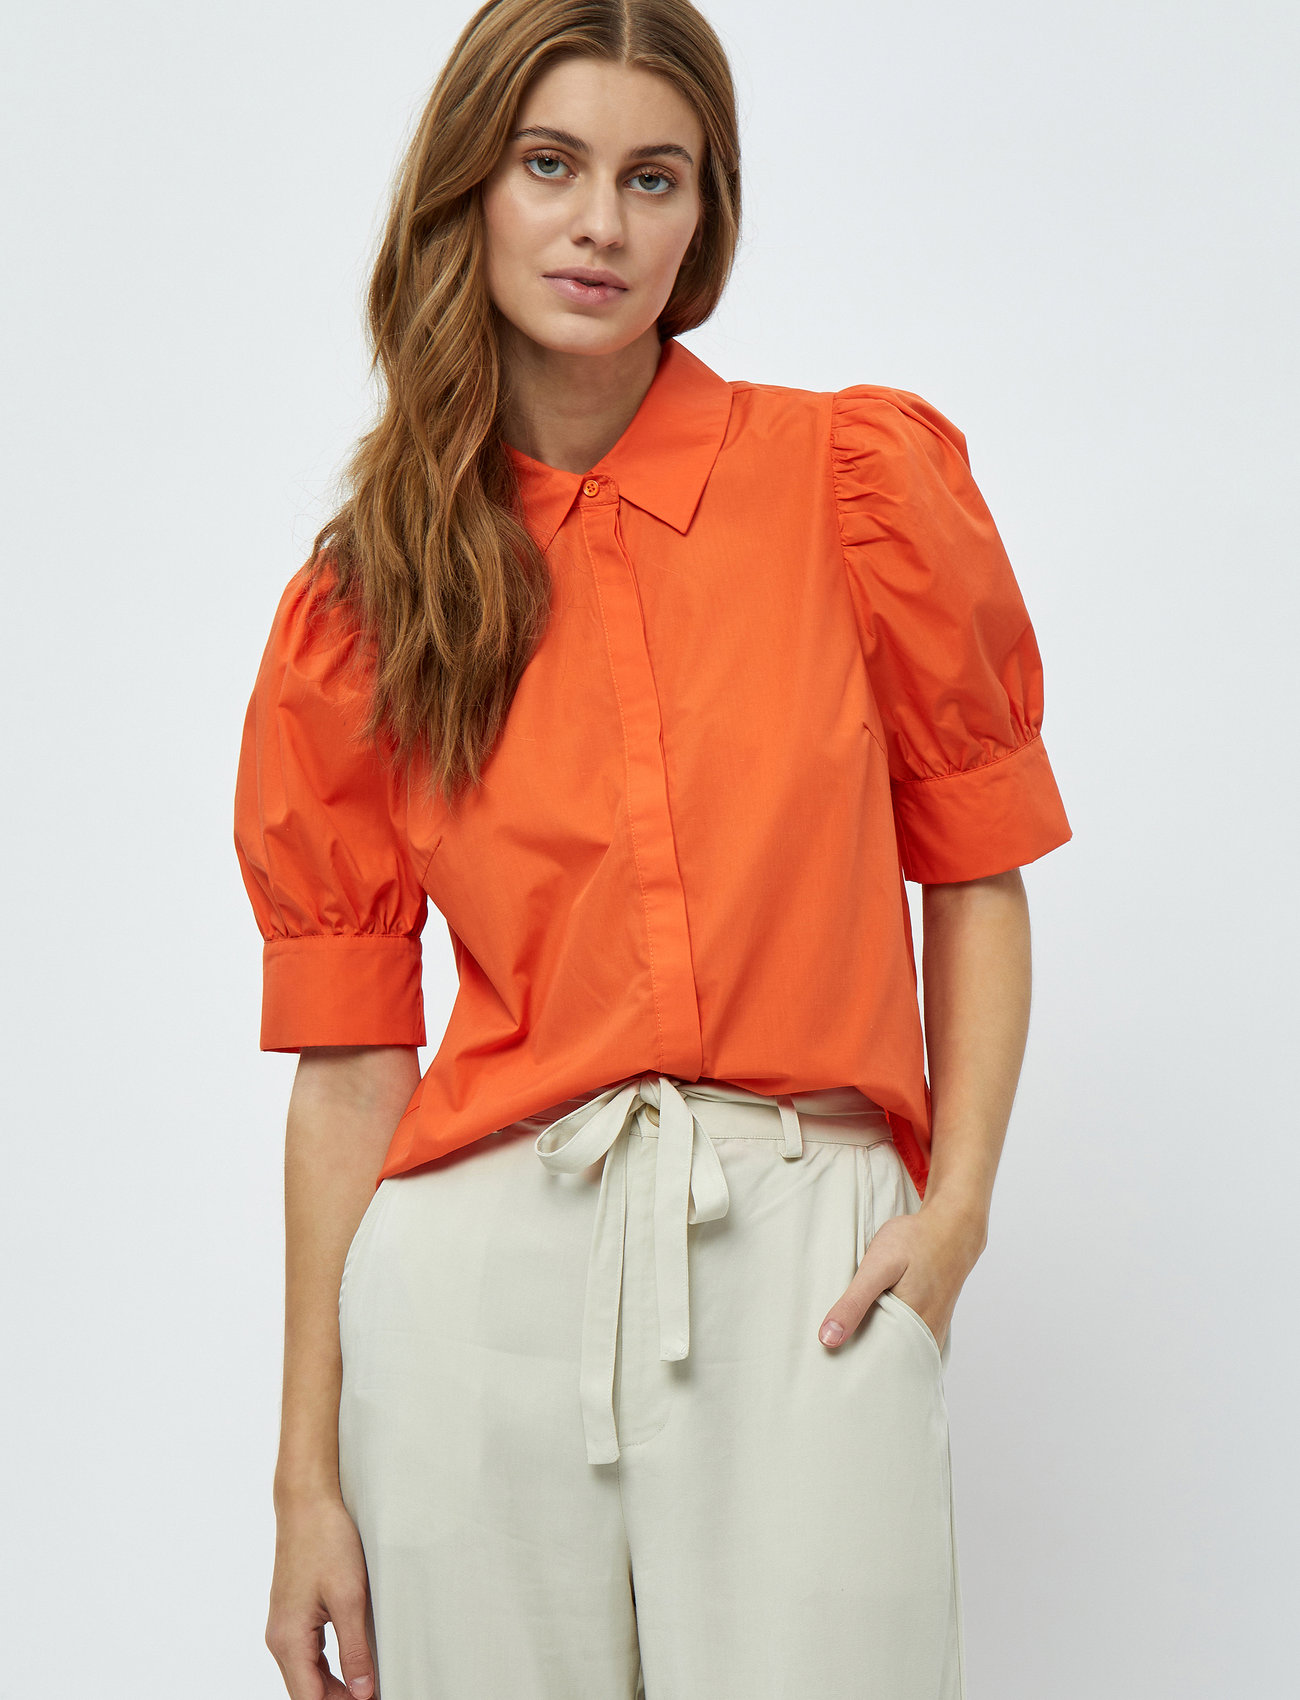 Minus - Molia Skjorte - koszule z krótkim rękawem - orange peel - 0